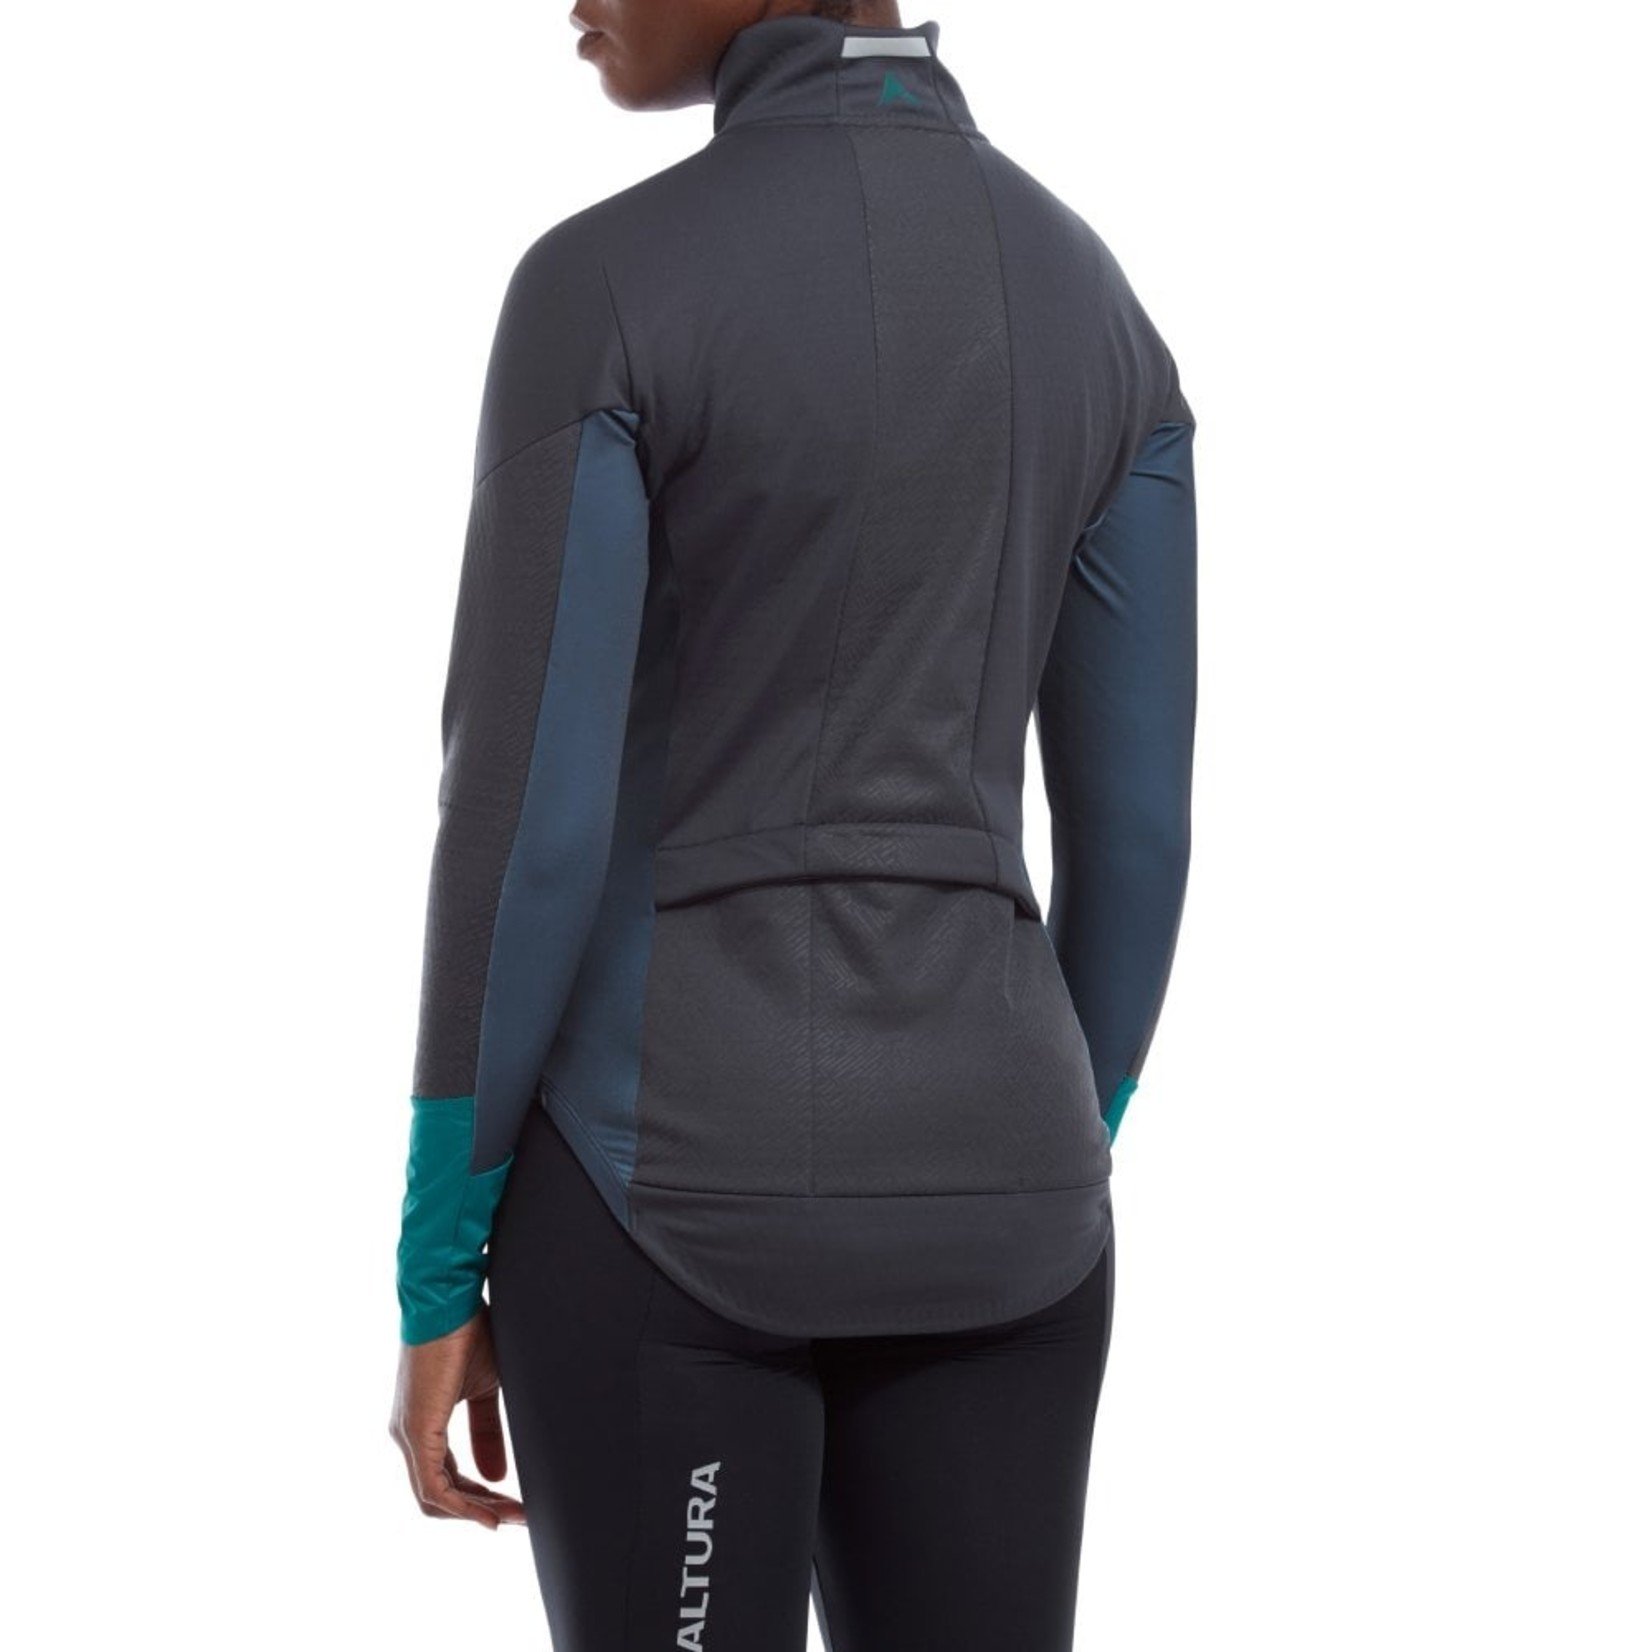 Review: Altura Endurance Mistral Women's Softshell Jacket